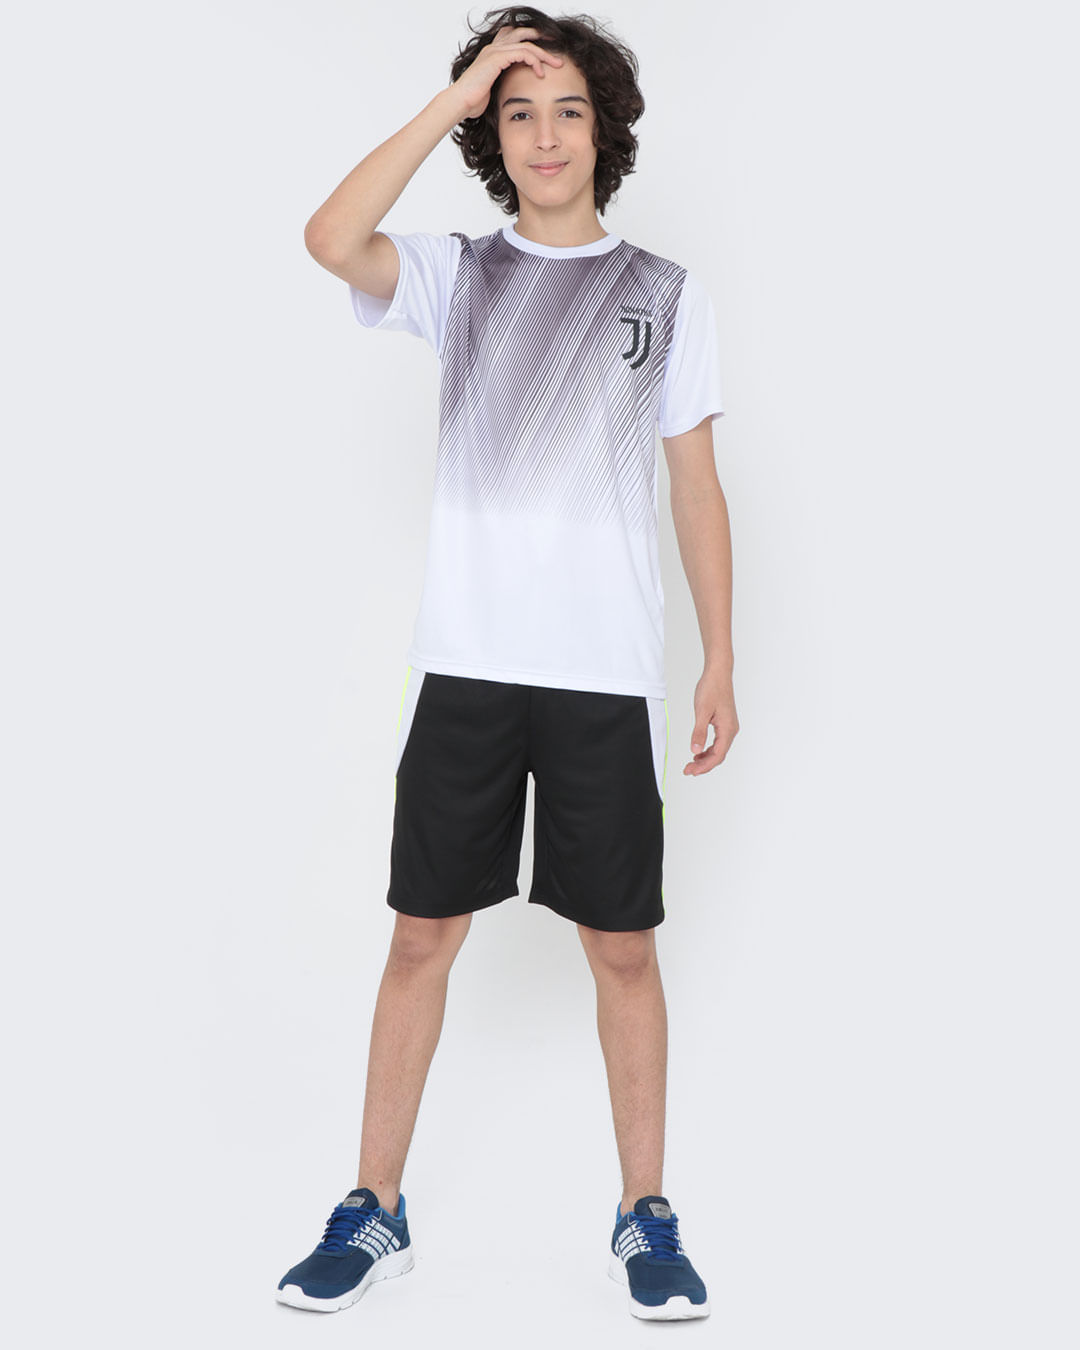 Camiseta-Trospr010-Mc-M1016-Juve---Branco